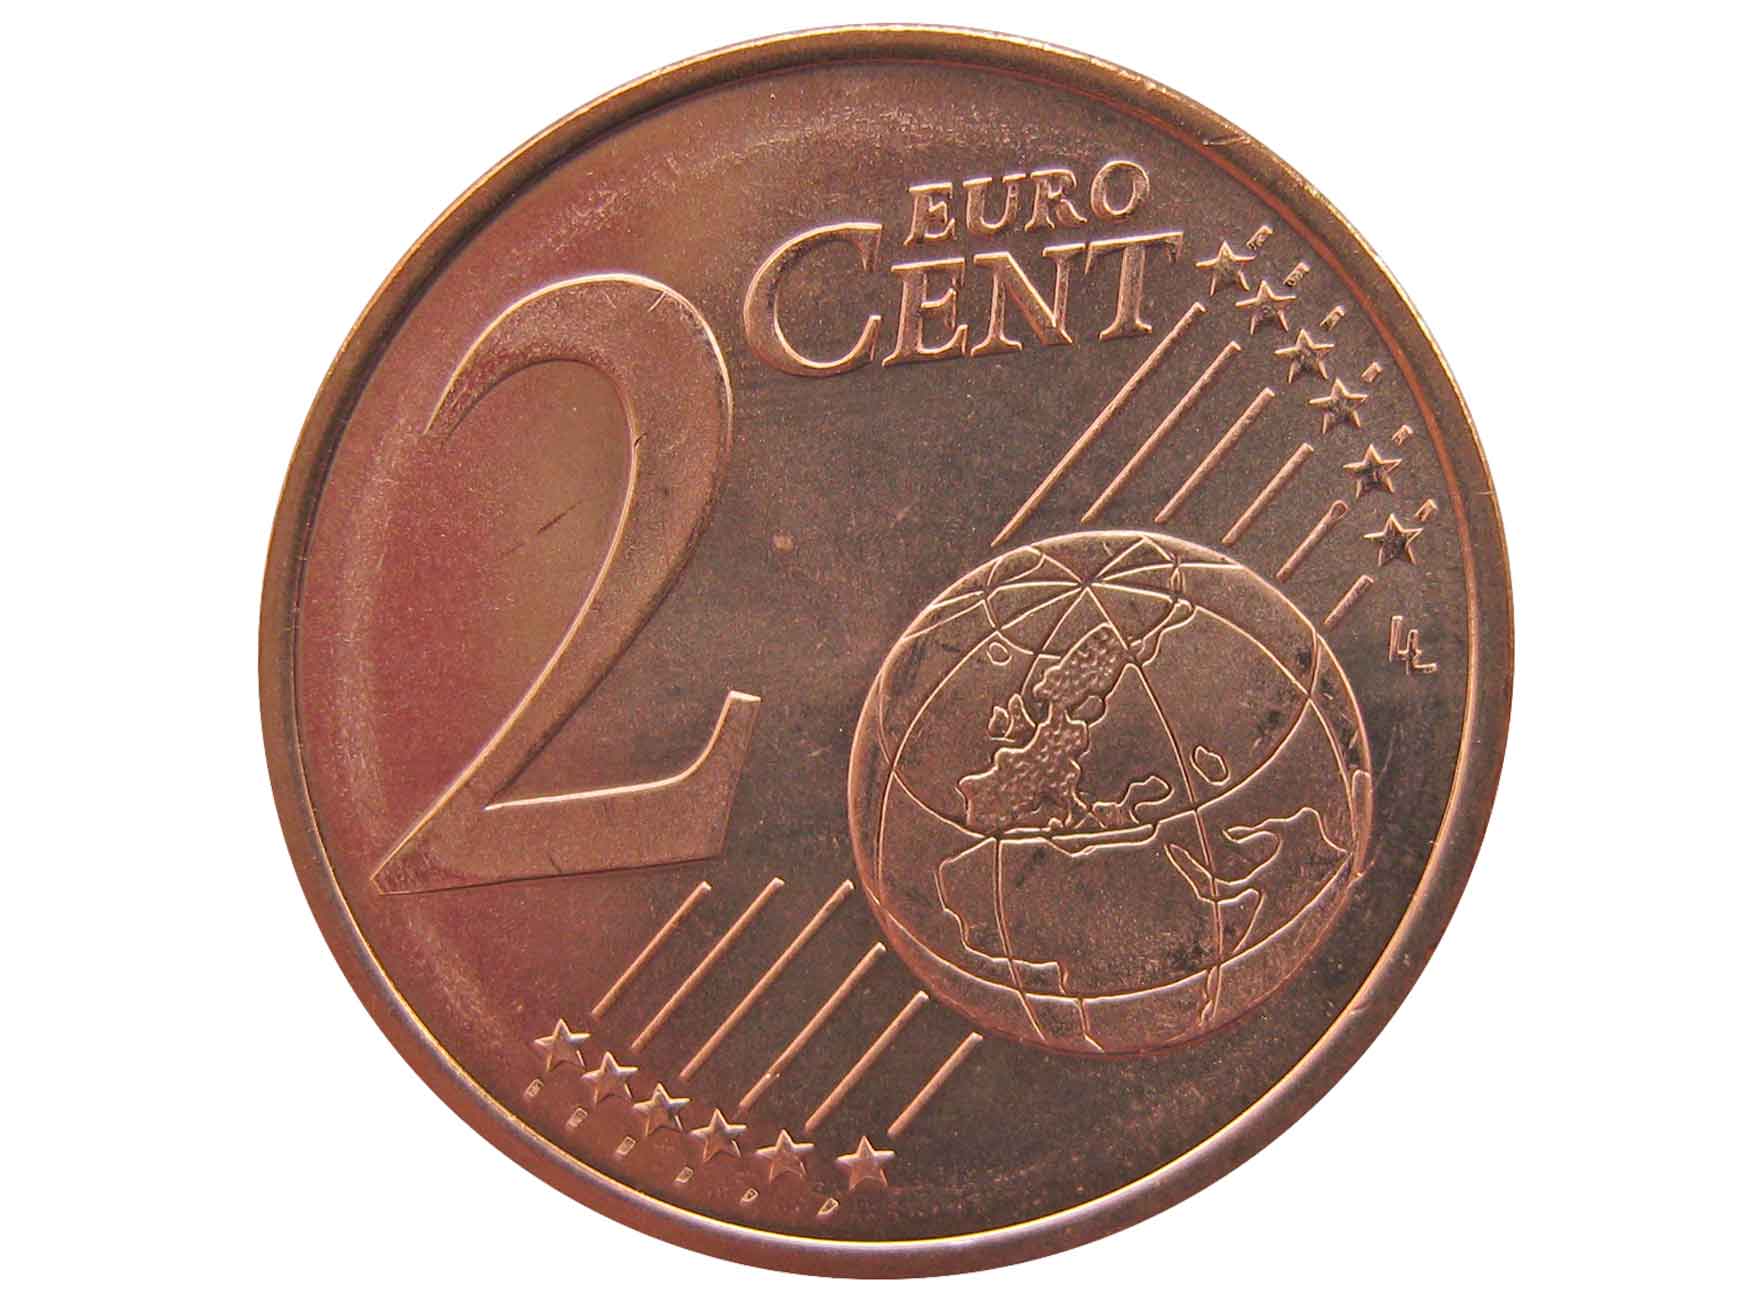 20 евроцентов в рублях. Австрийский 10 евро цент 2000 г. 2 Евро цента. Австрия 2 цента 2011. Цент 2 2010.